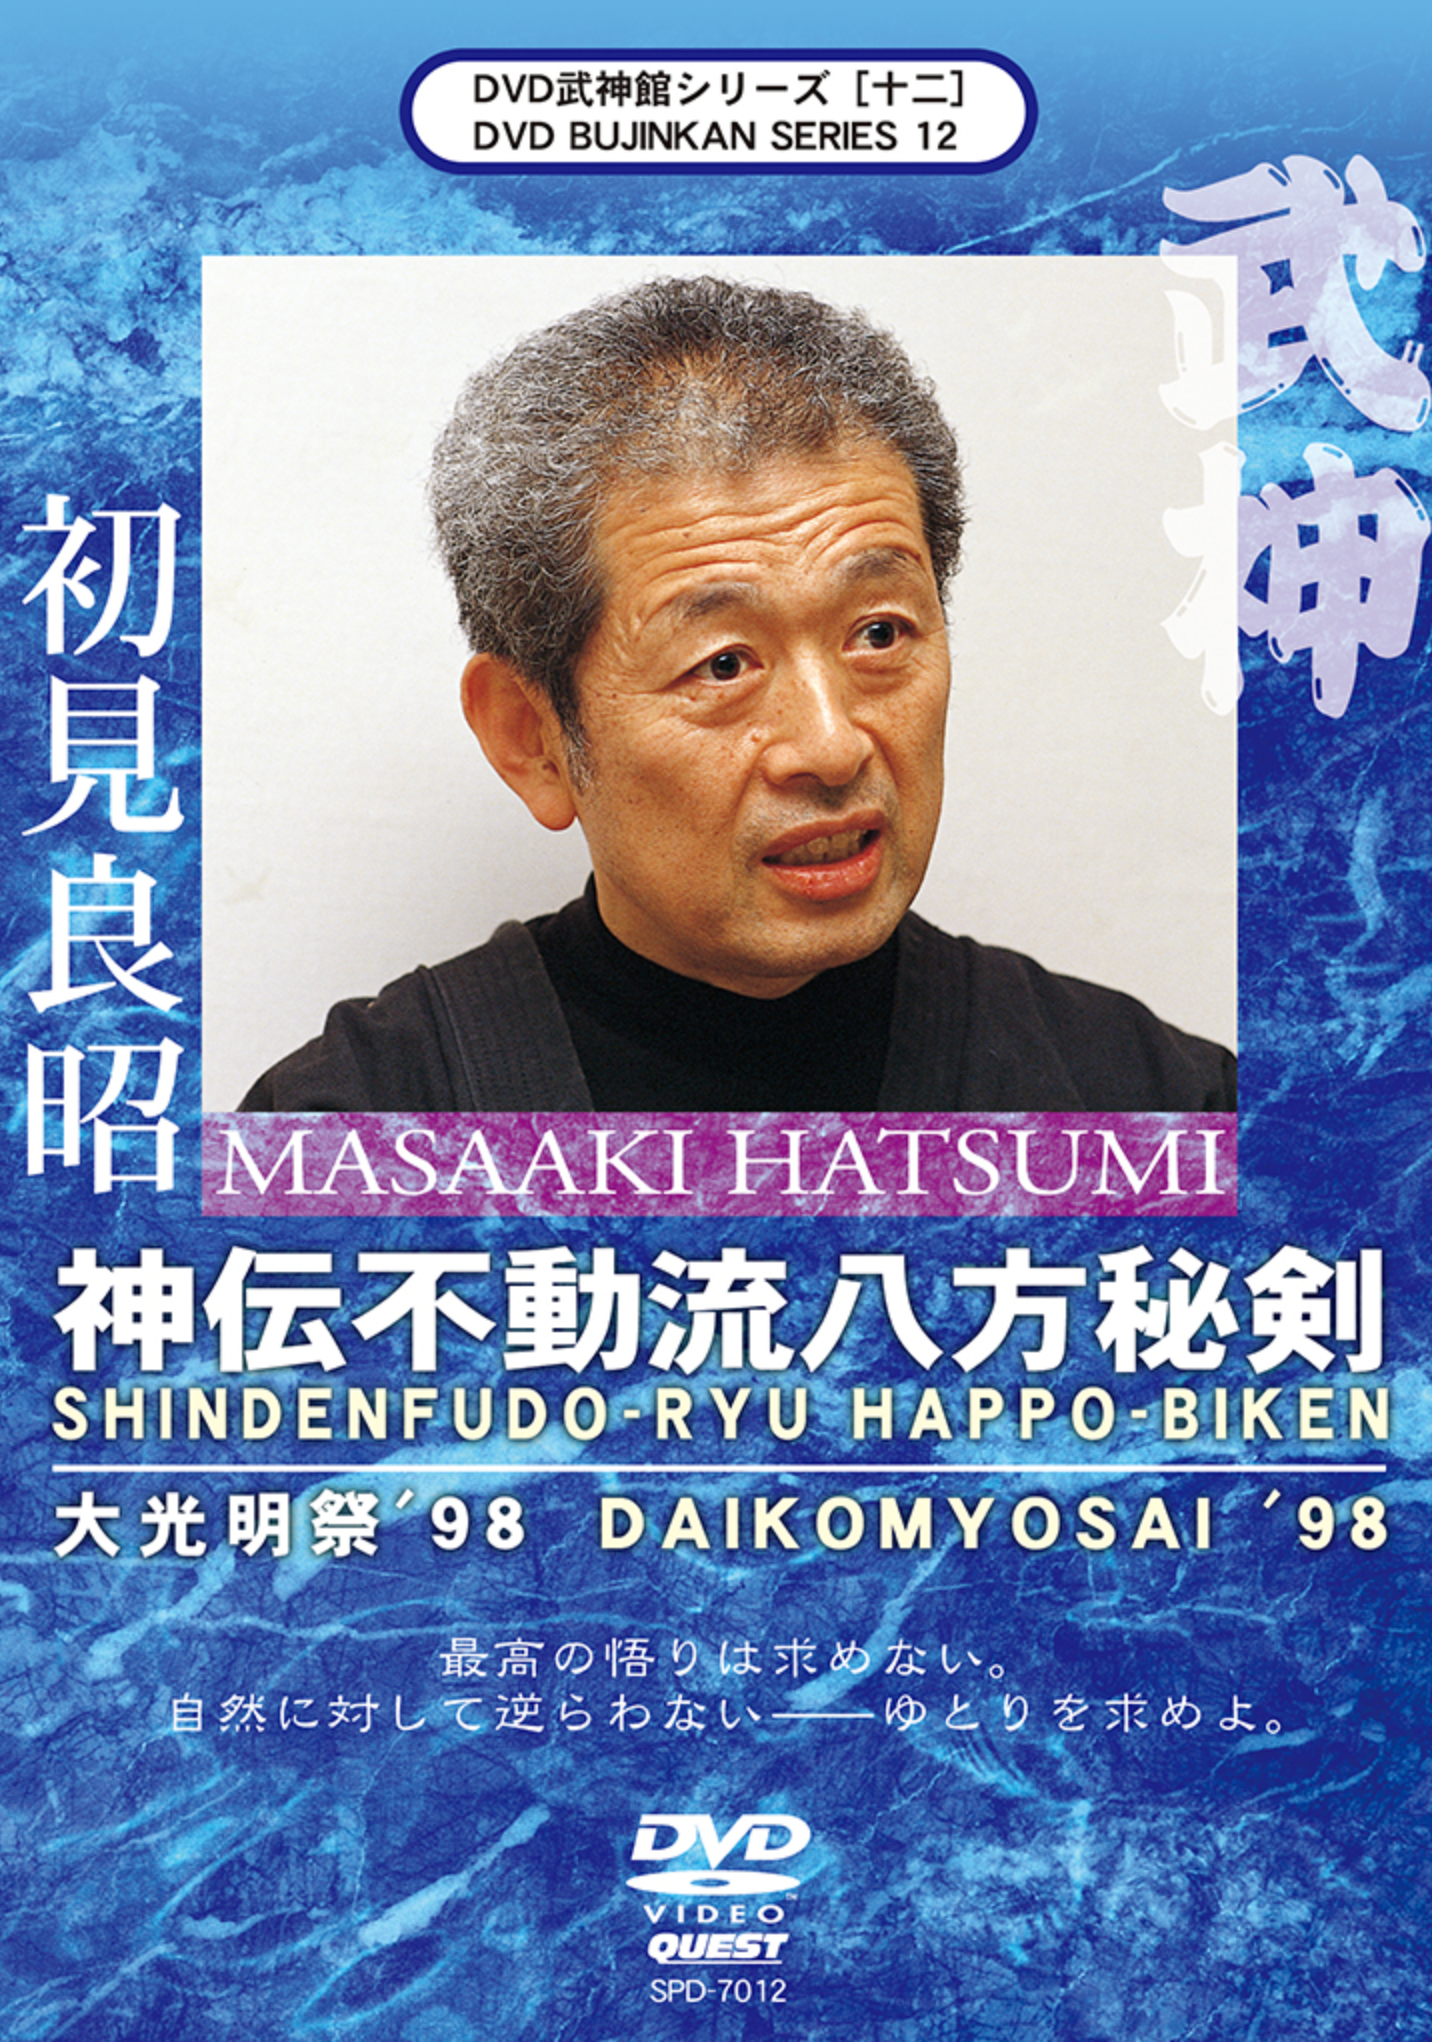 Bujinkan DVD Series 12: Shinden Fudo Ryu Happo Biken with Masaaki Hatsumi - Budovideos Inc